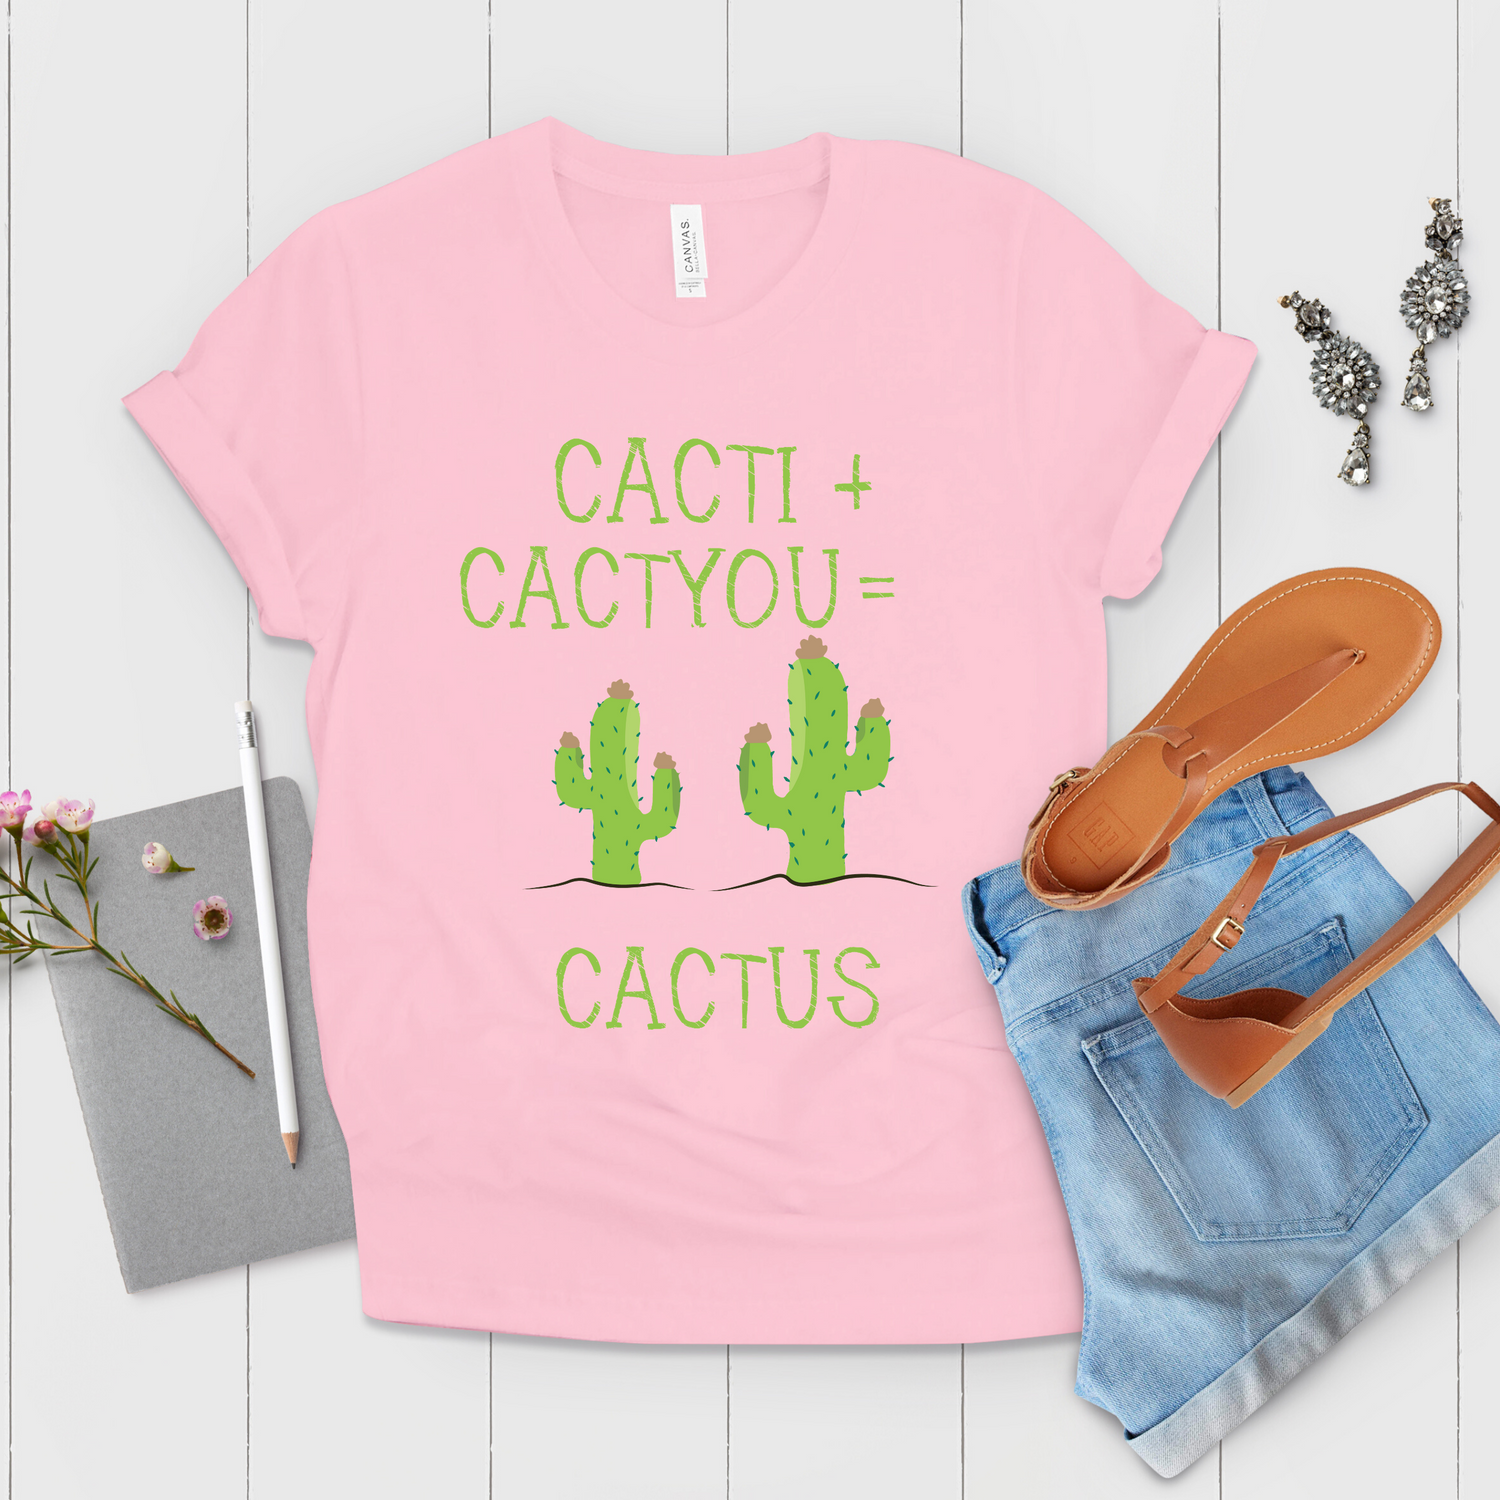 Cacti plus Cactyou equals Cactus Plant Shirt - Teegarb